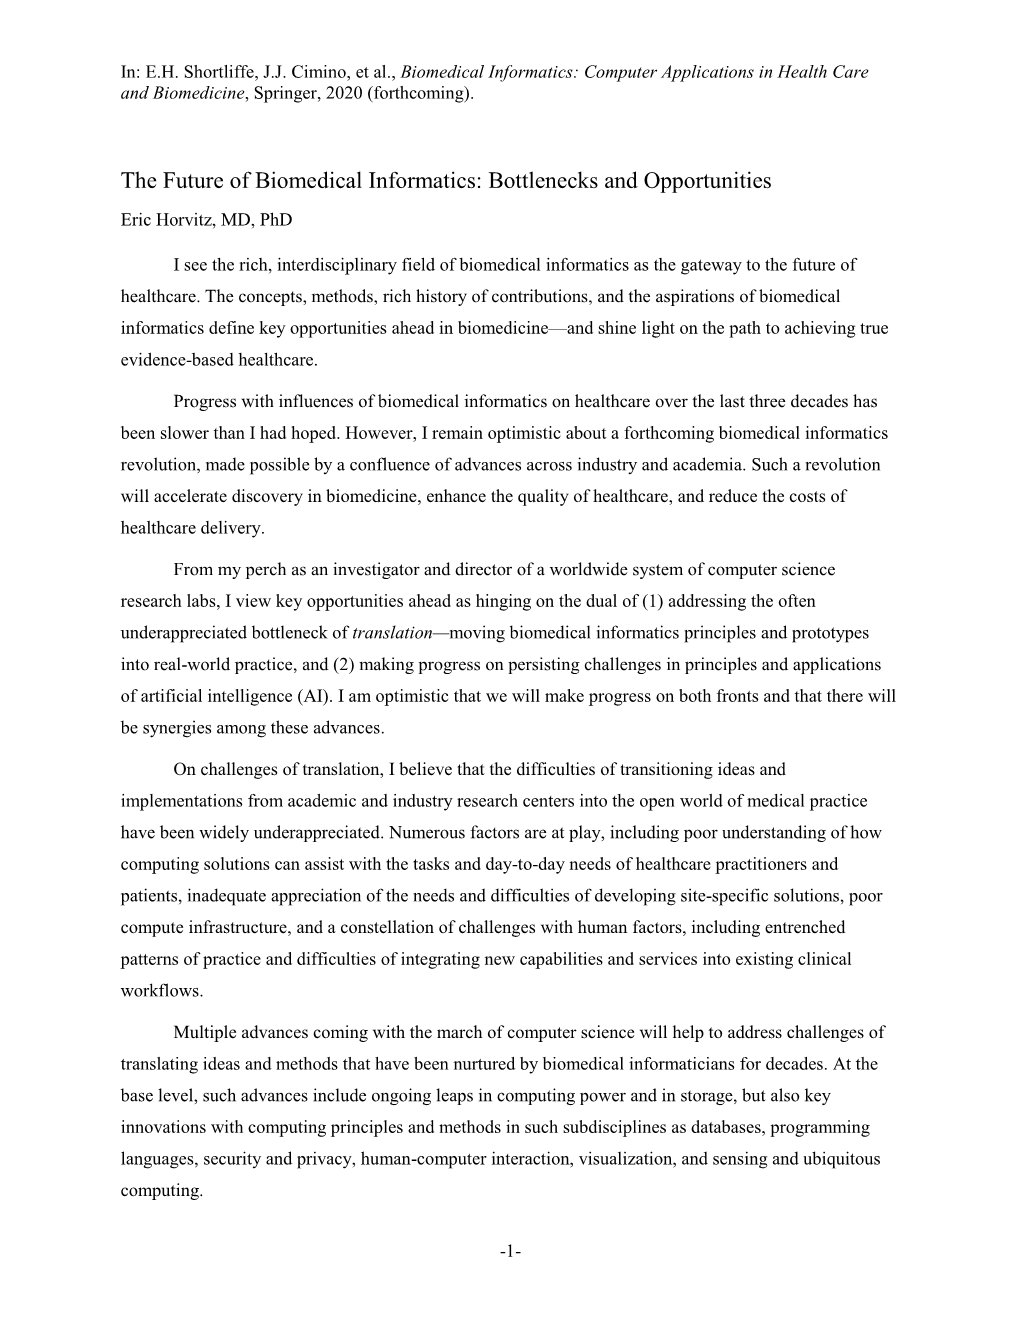 The Future of Biomedical Informatics: Bottlenecks and Opportunities Eric Horvitz, MD, Phd